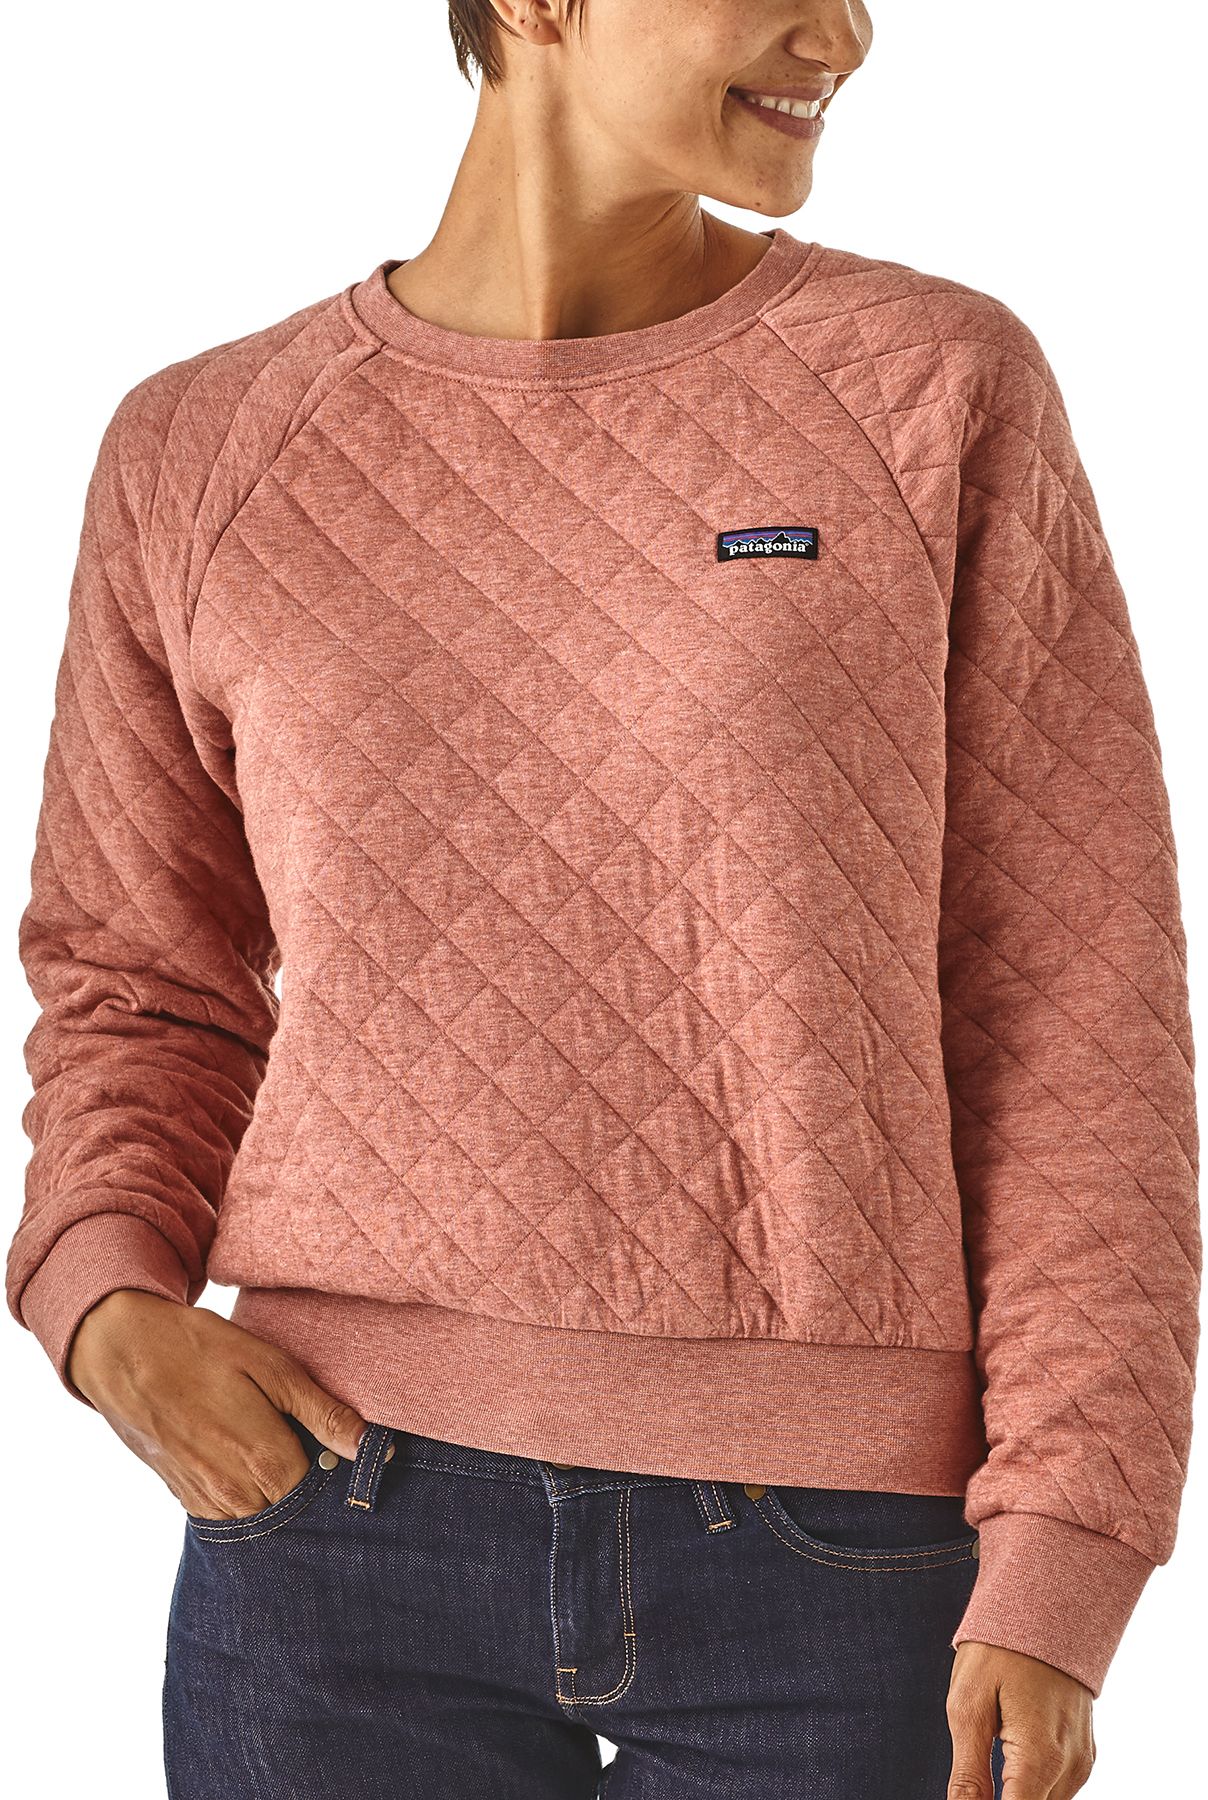 patagonia women's quilted sweatshirt